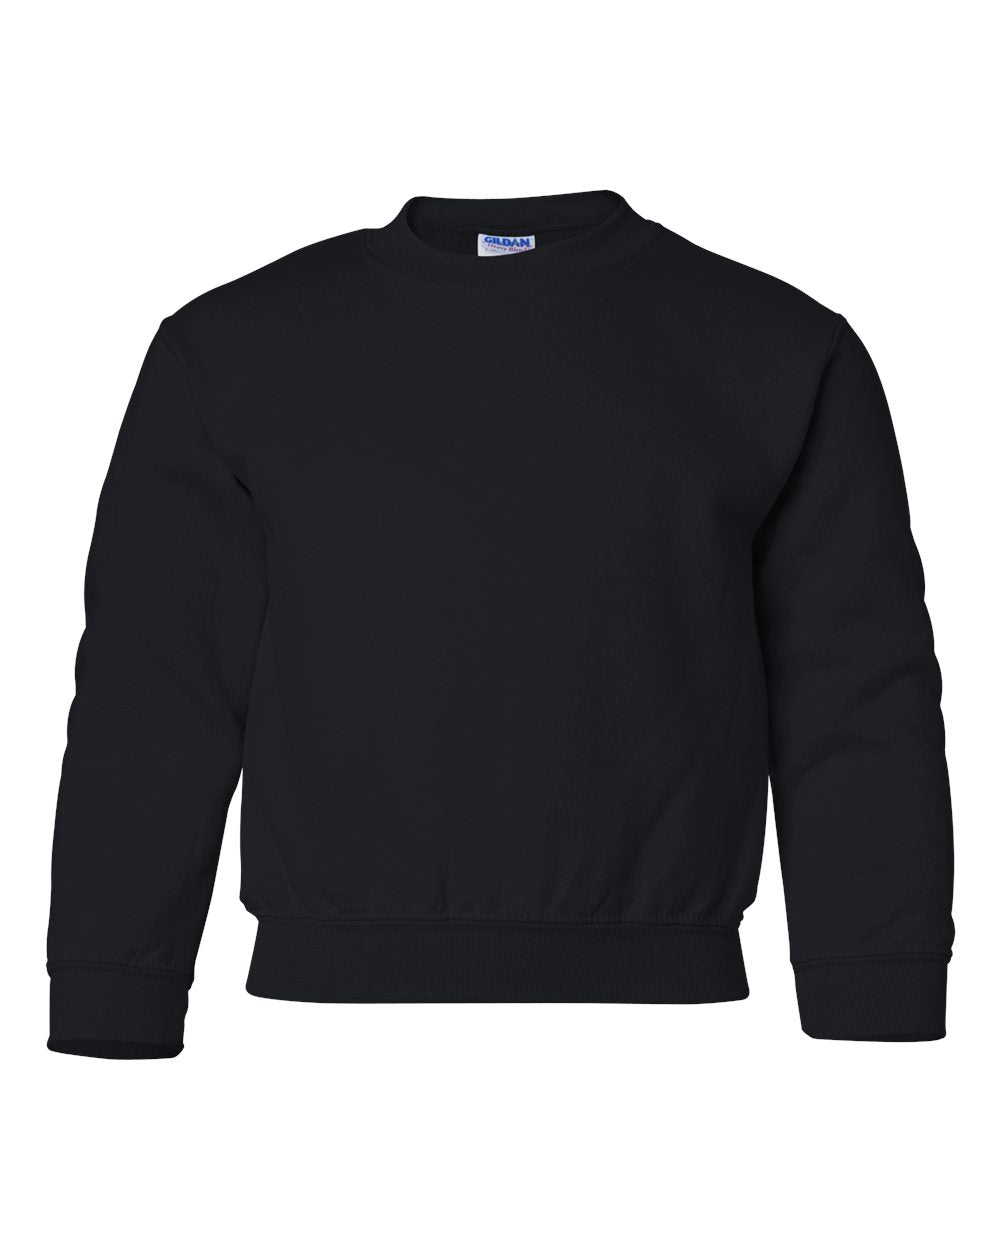 Gildan Youth Crewneck Sweatshirt (18000b) in Black